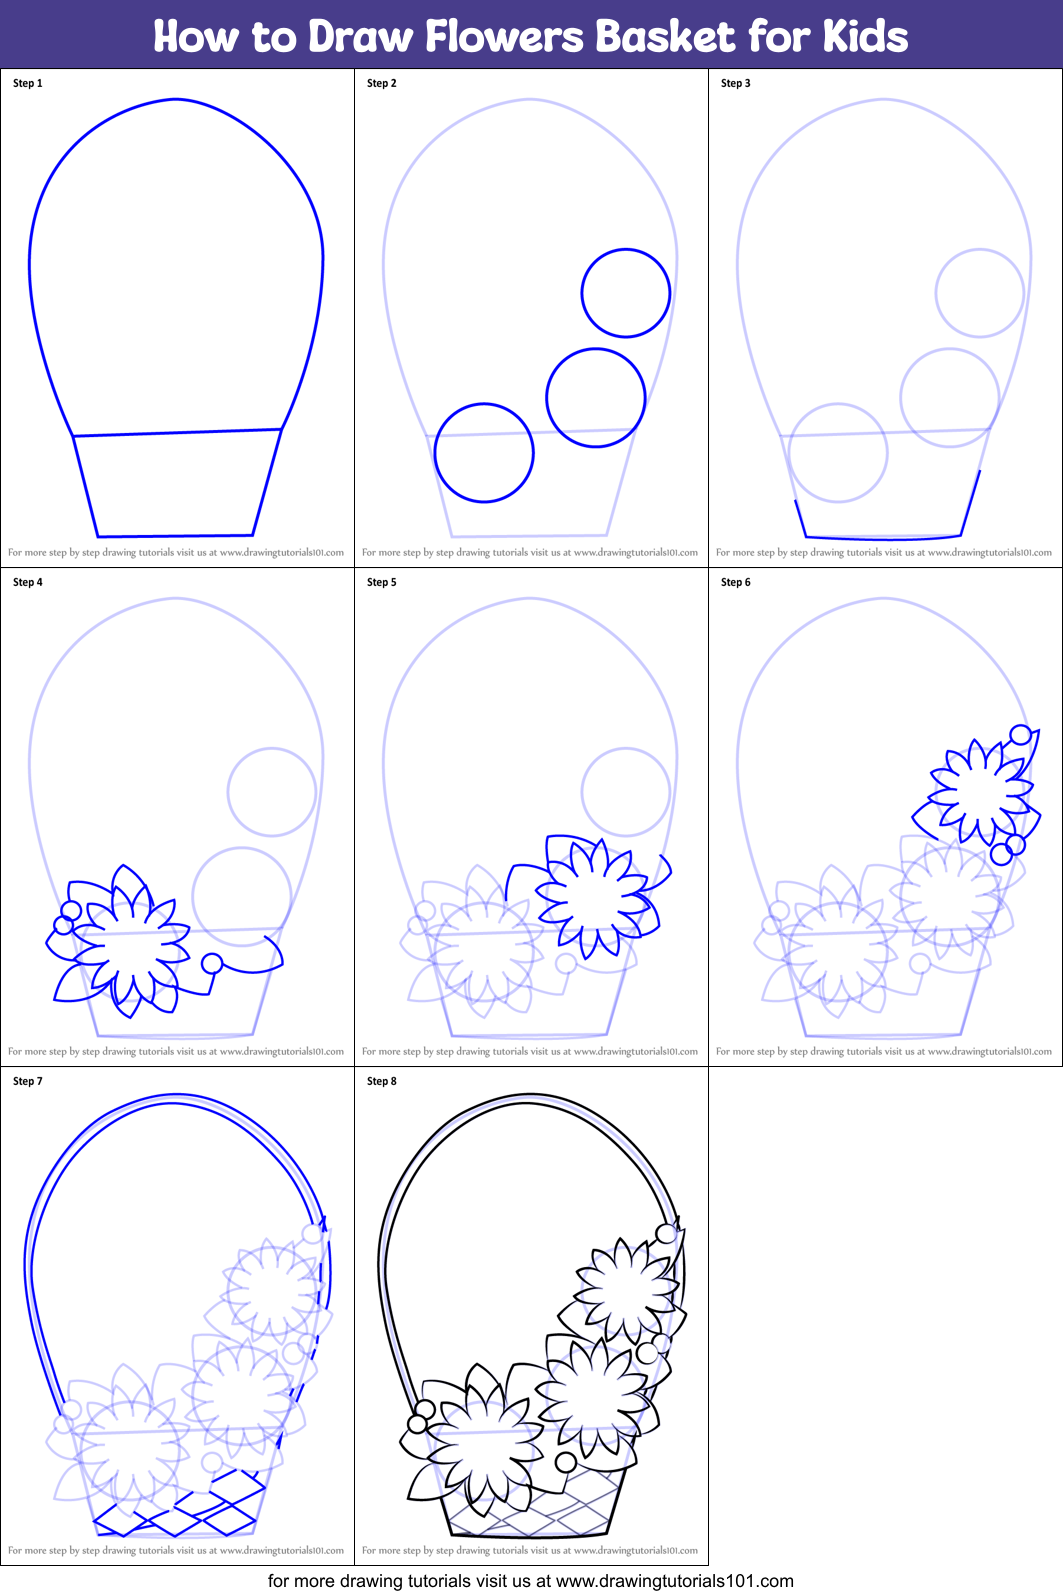 Basket of Flowers | Kids' Crafts | Fun Craft Ideas | FirstPalette.com